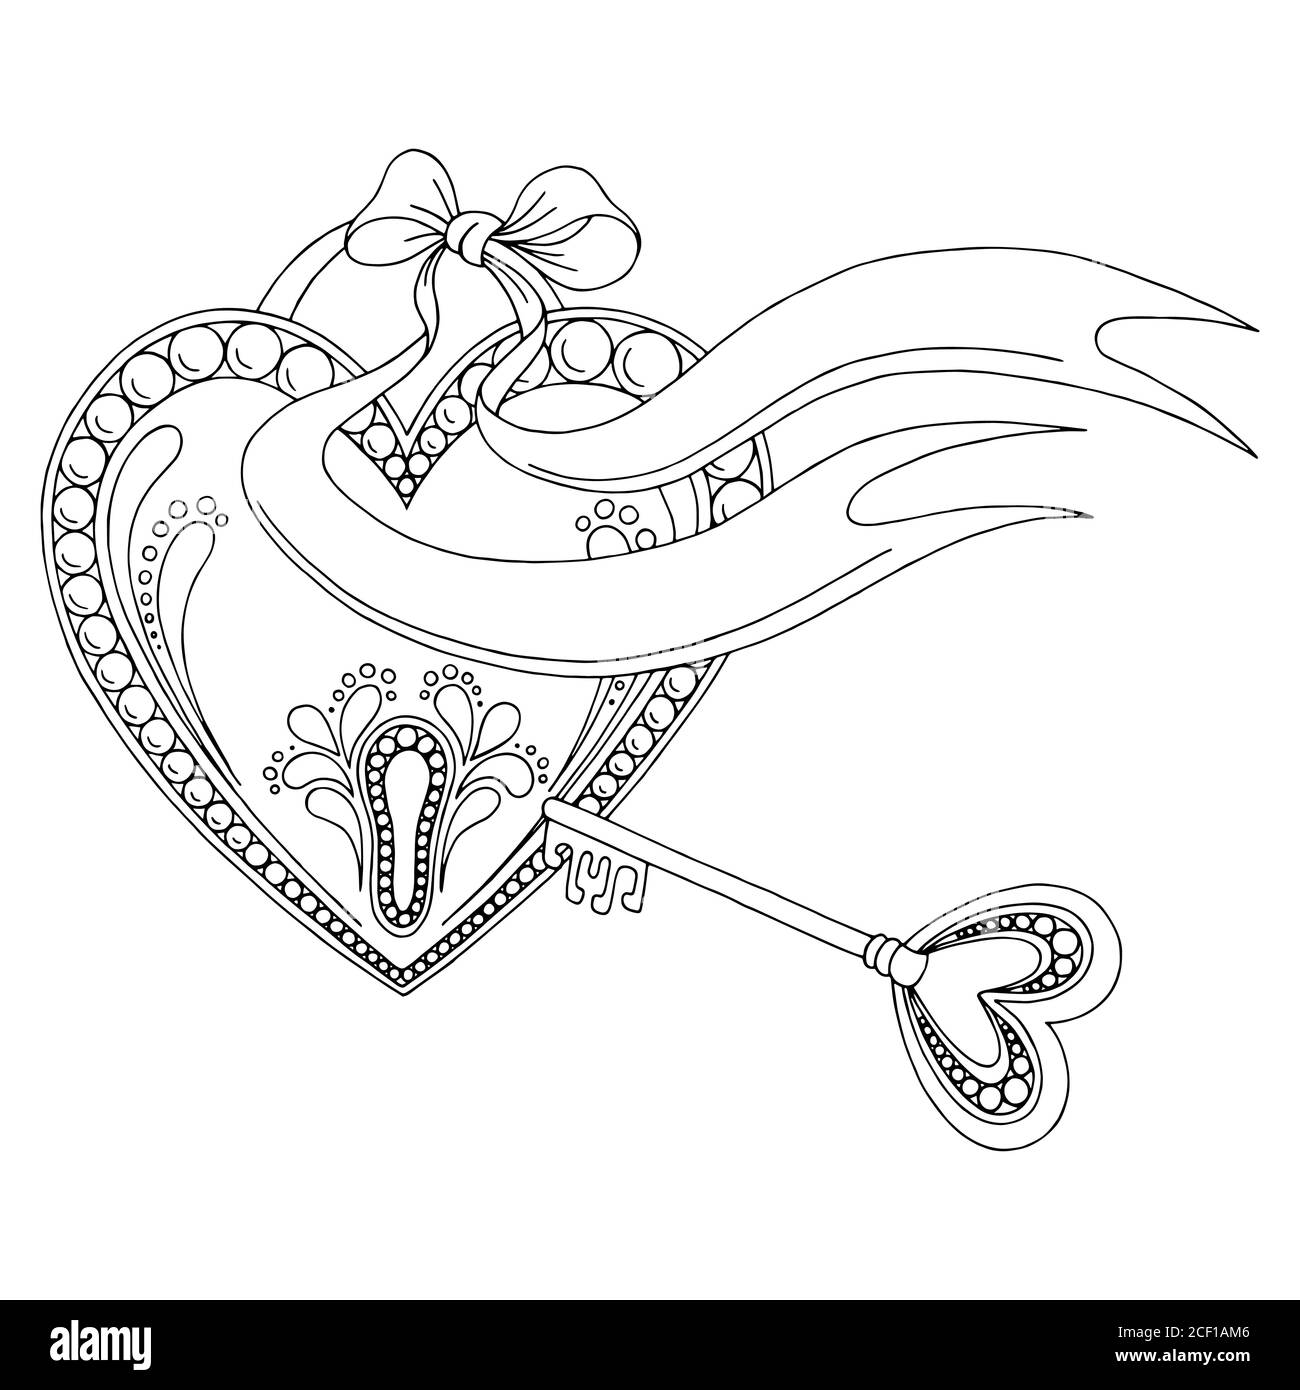 Pattern heart lock key doodle black white graphic sketch background illustration vector Stock Vector